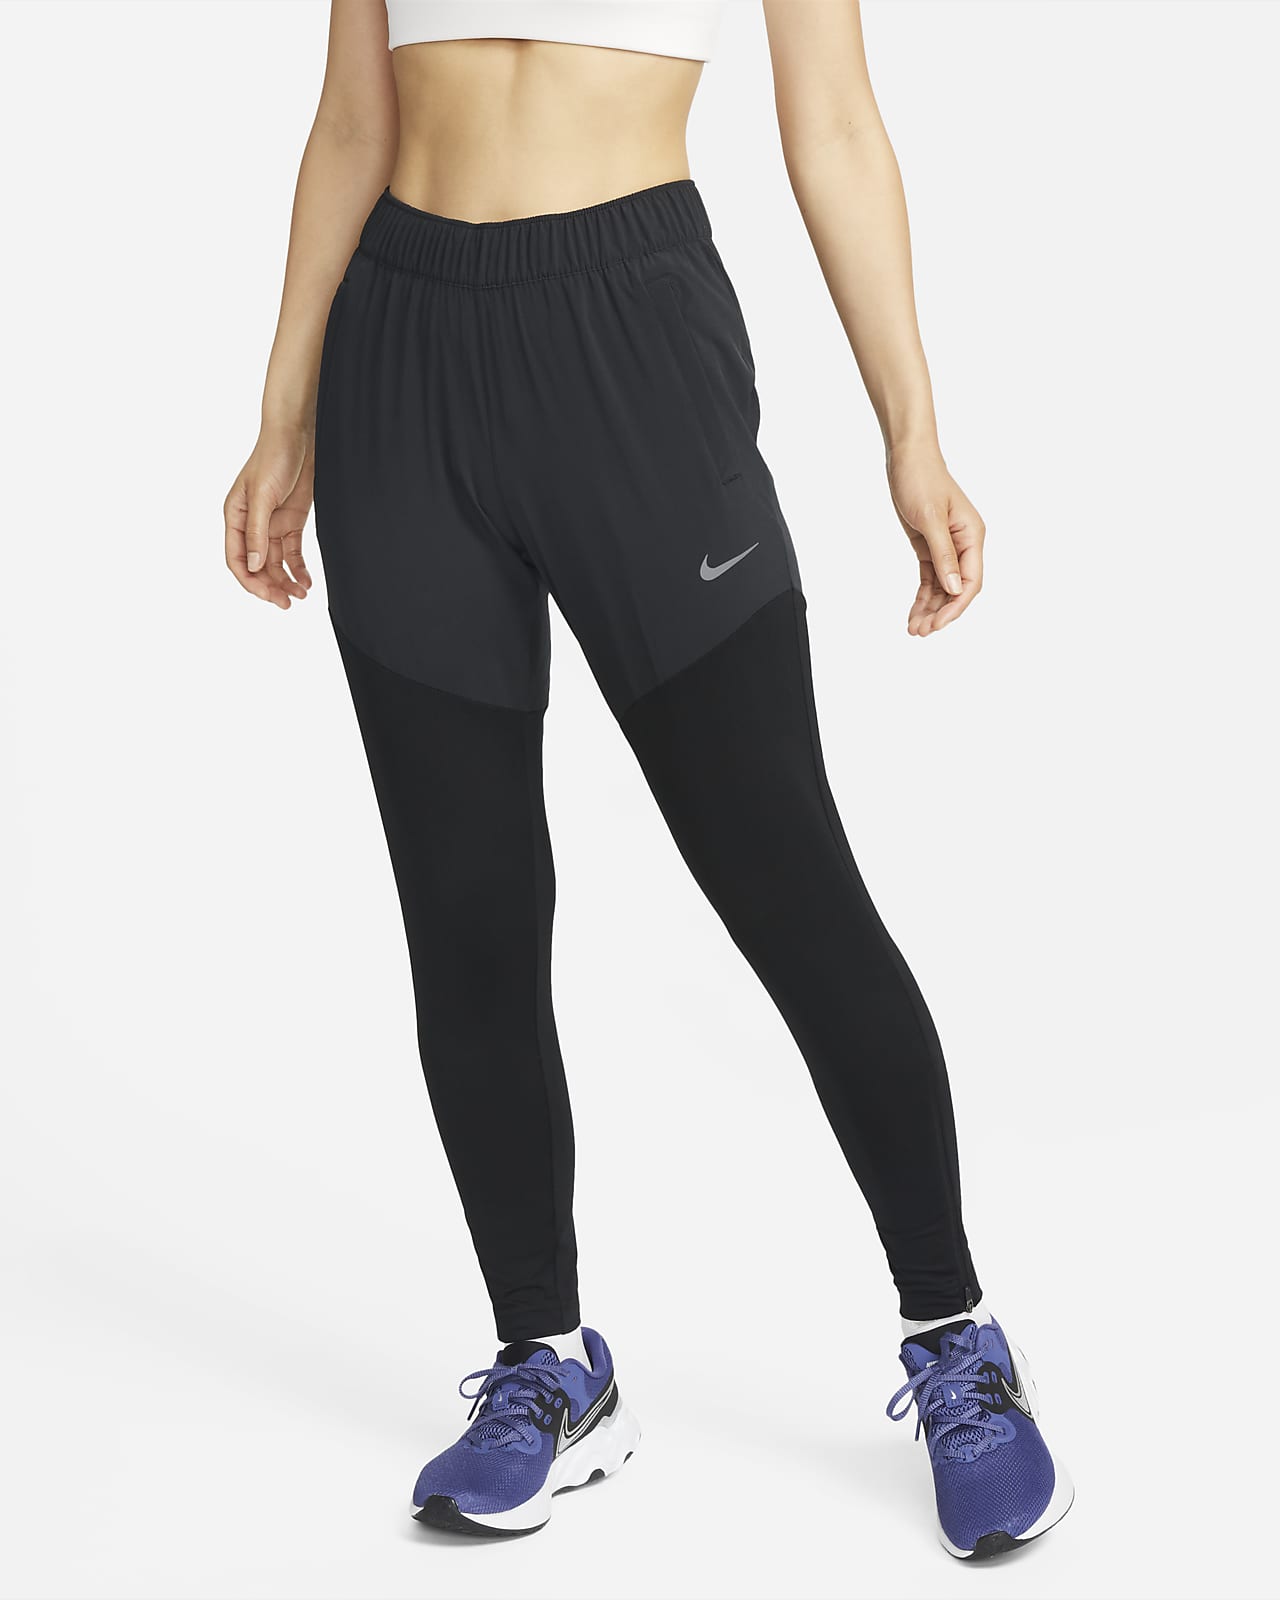 Nike Dri-FIT Women's Running Trousers